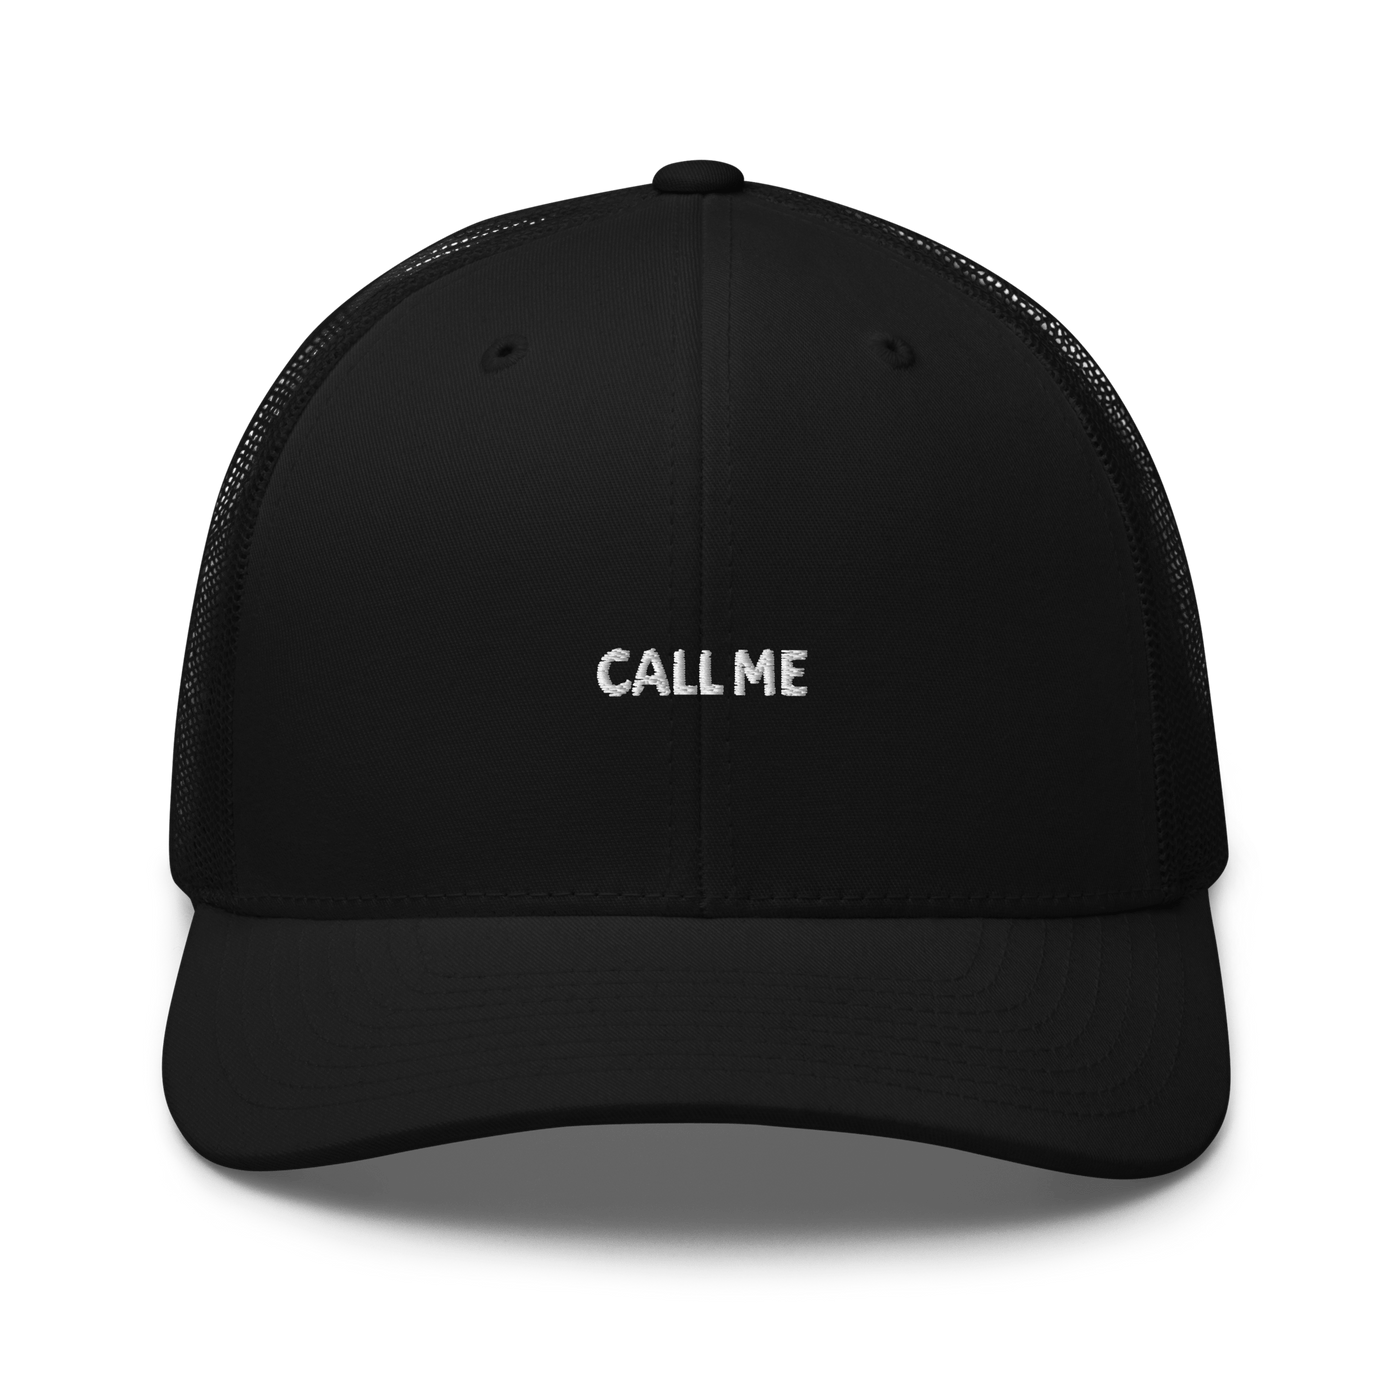 Call Me Trucker Cap - Khaki - - Just Another Cap Store